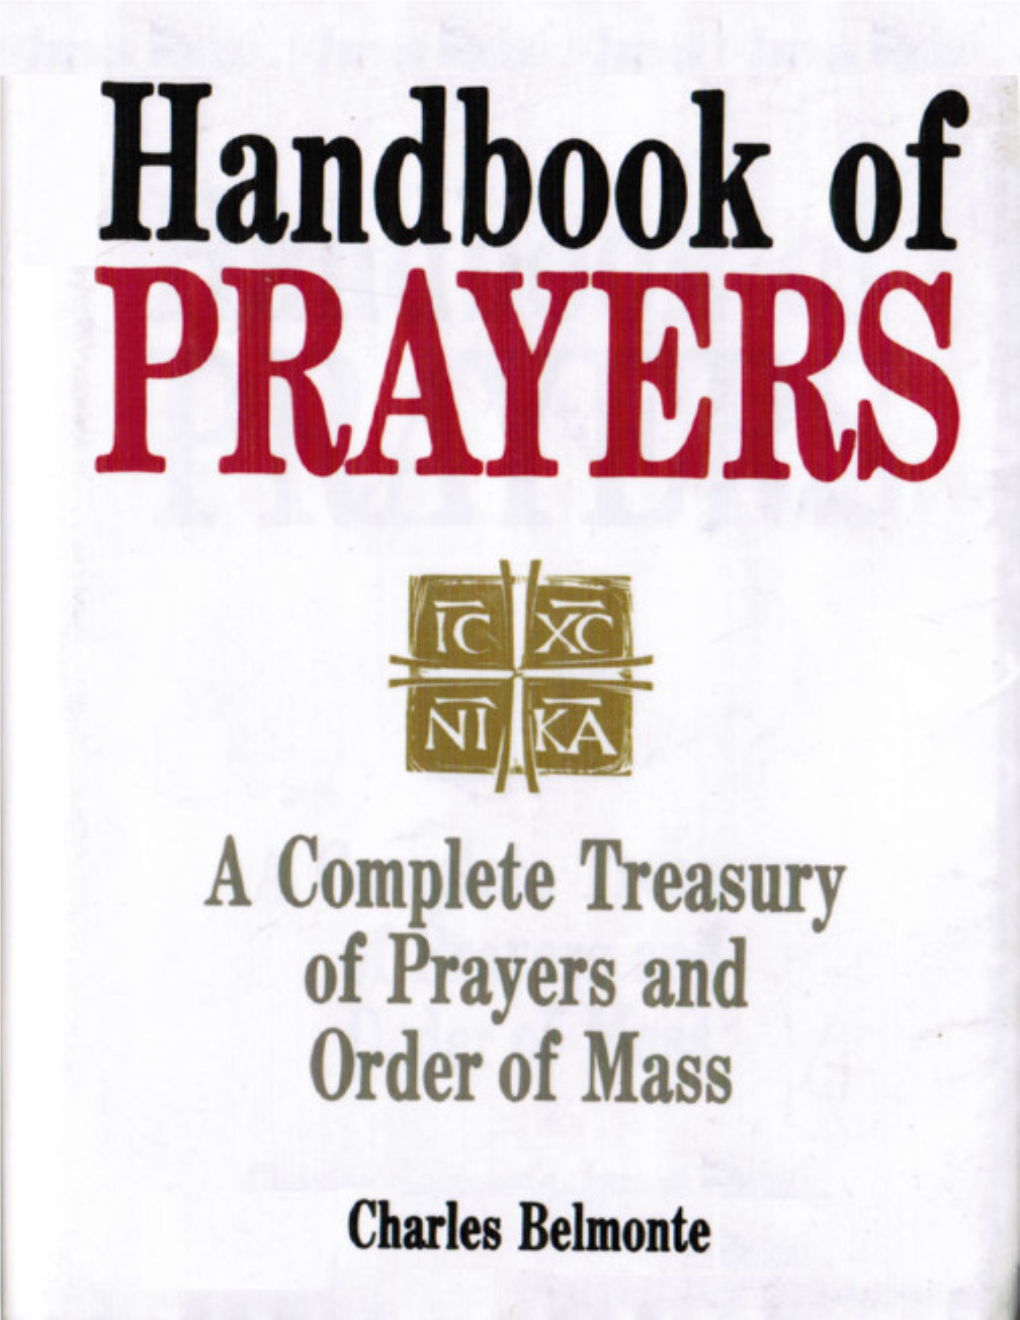 HANDBOOK of PRAYERS by Charles Belmonte